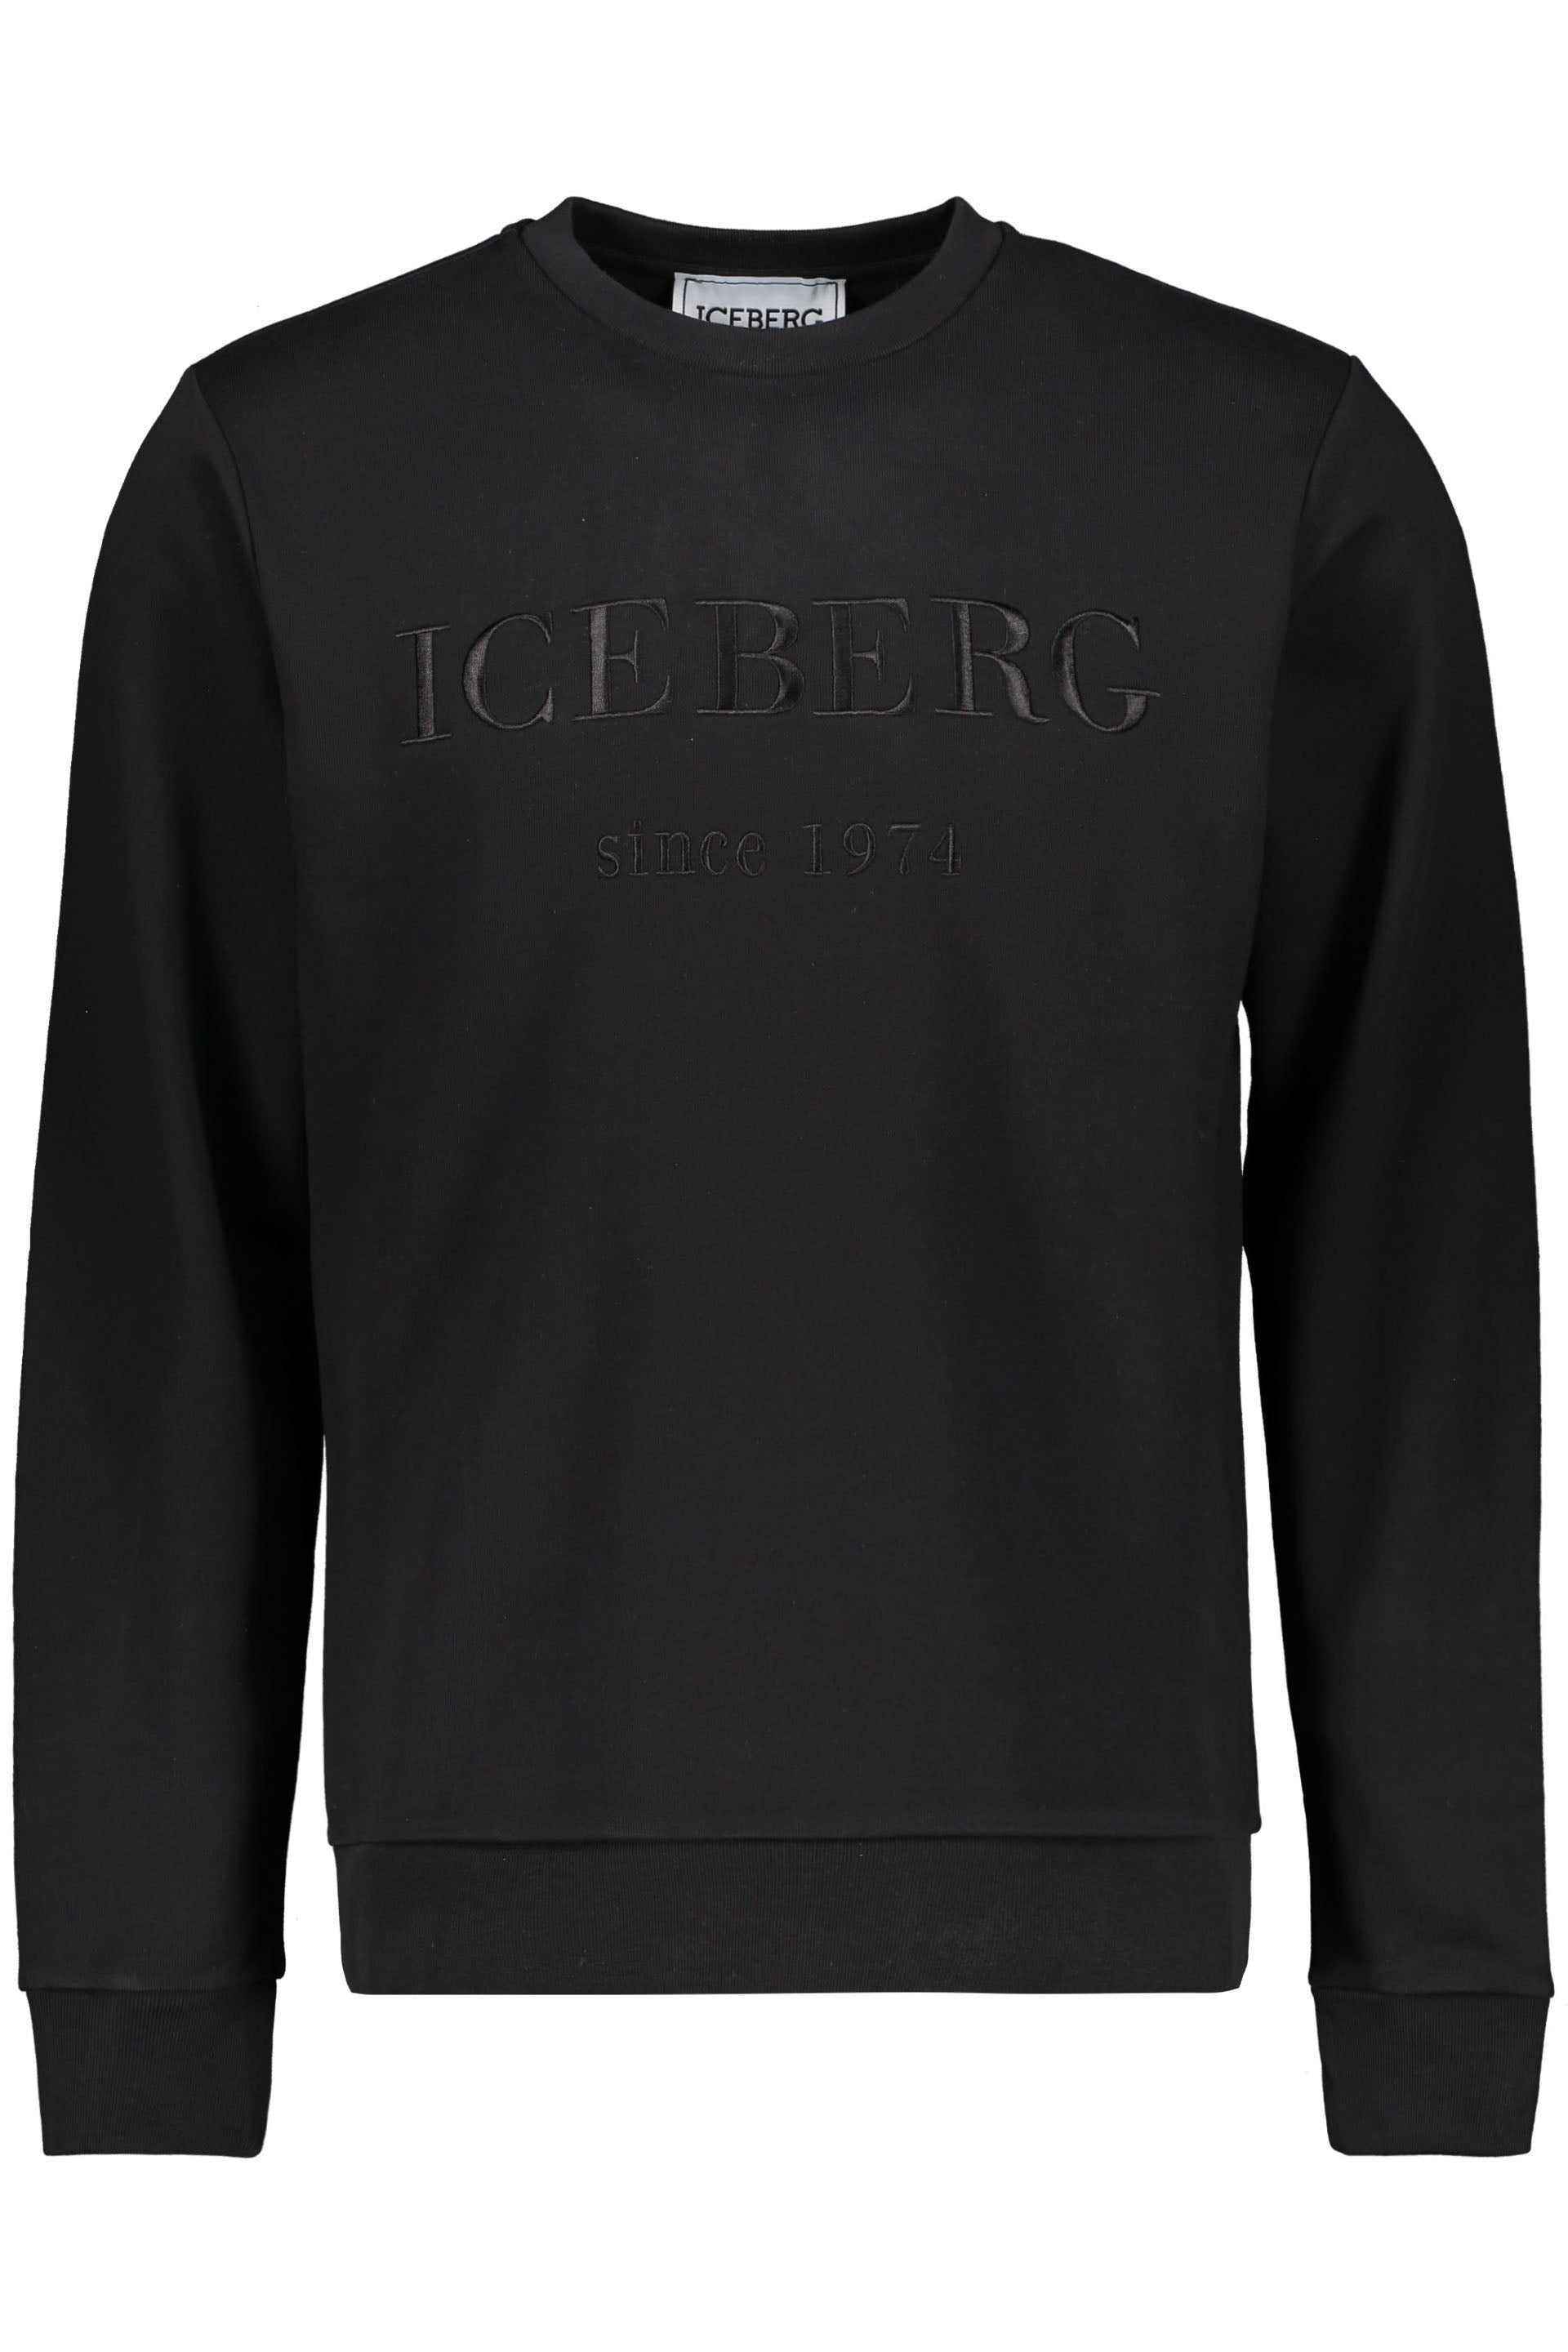 Long sleeve sweatshirt-Iceberg-OUTLET-SALE-L-ARCHIVIST